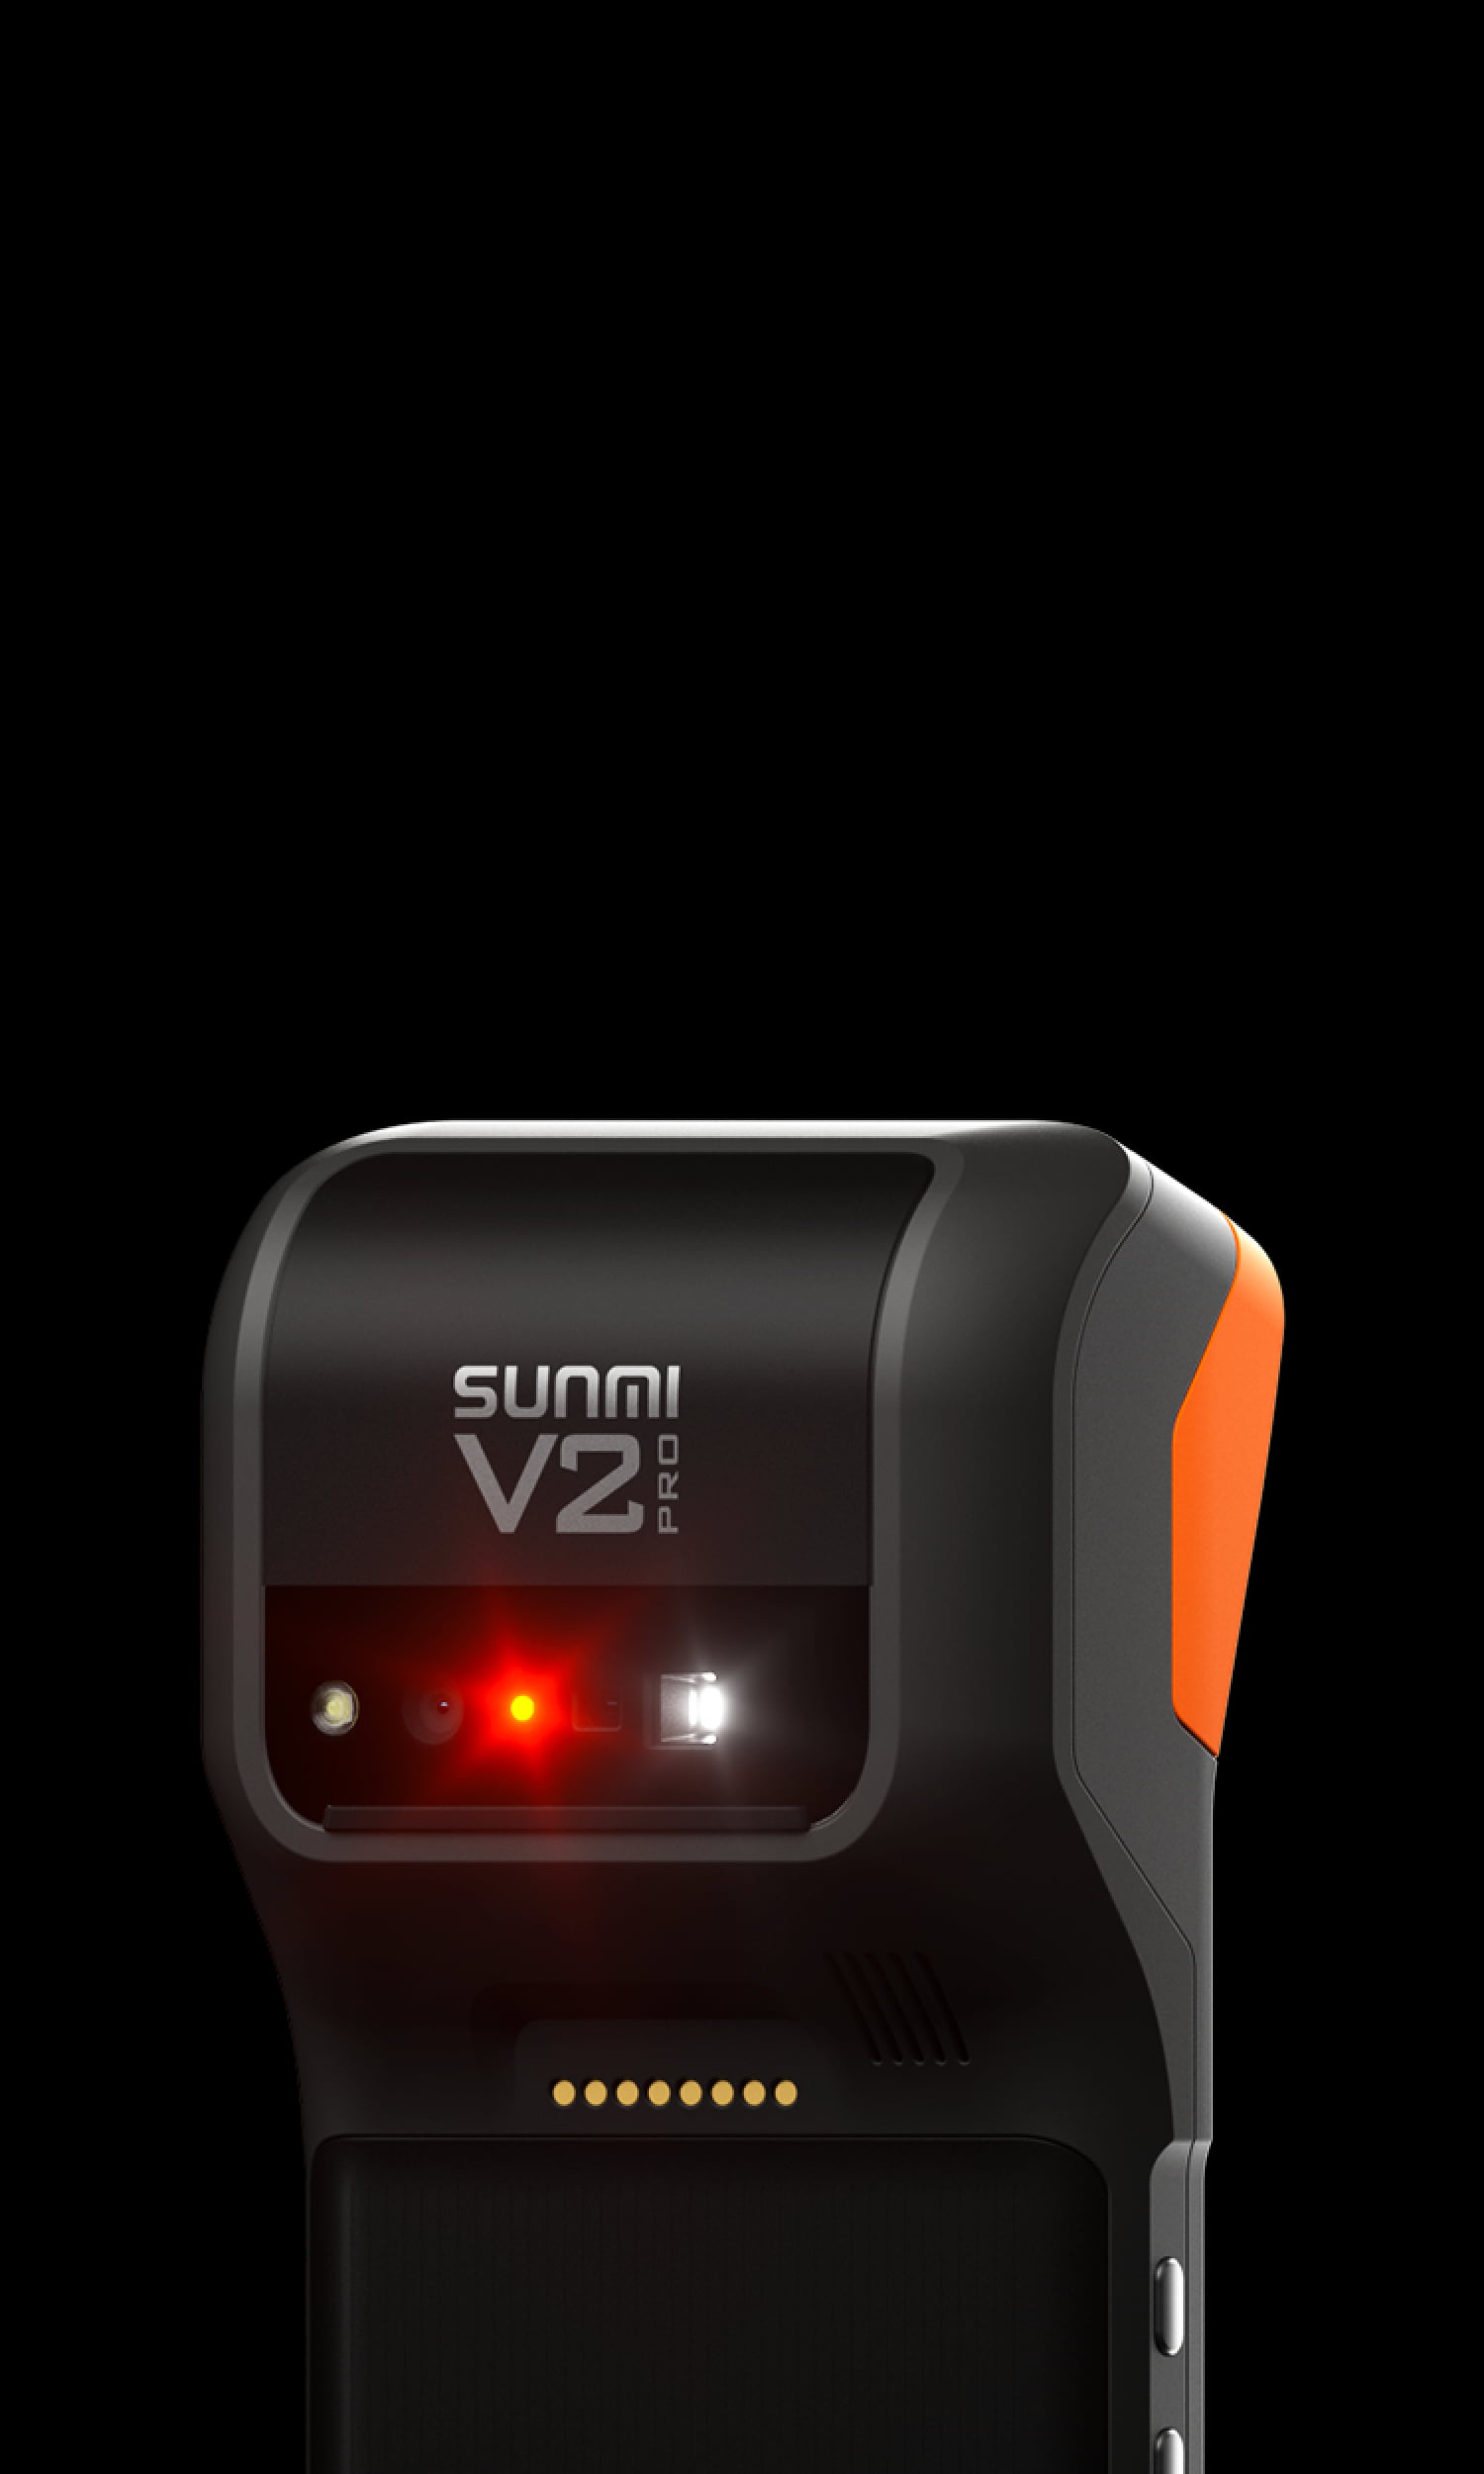 Sunmi V2 PRO Wi-FI 4g NFC 2D 2 GB 16GB POS Terminal Printer 58mm SIM Card 10 PZ